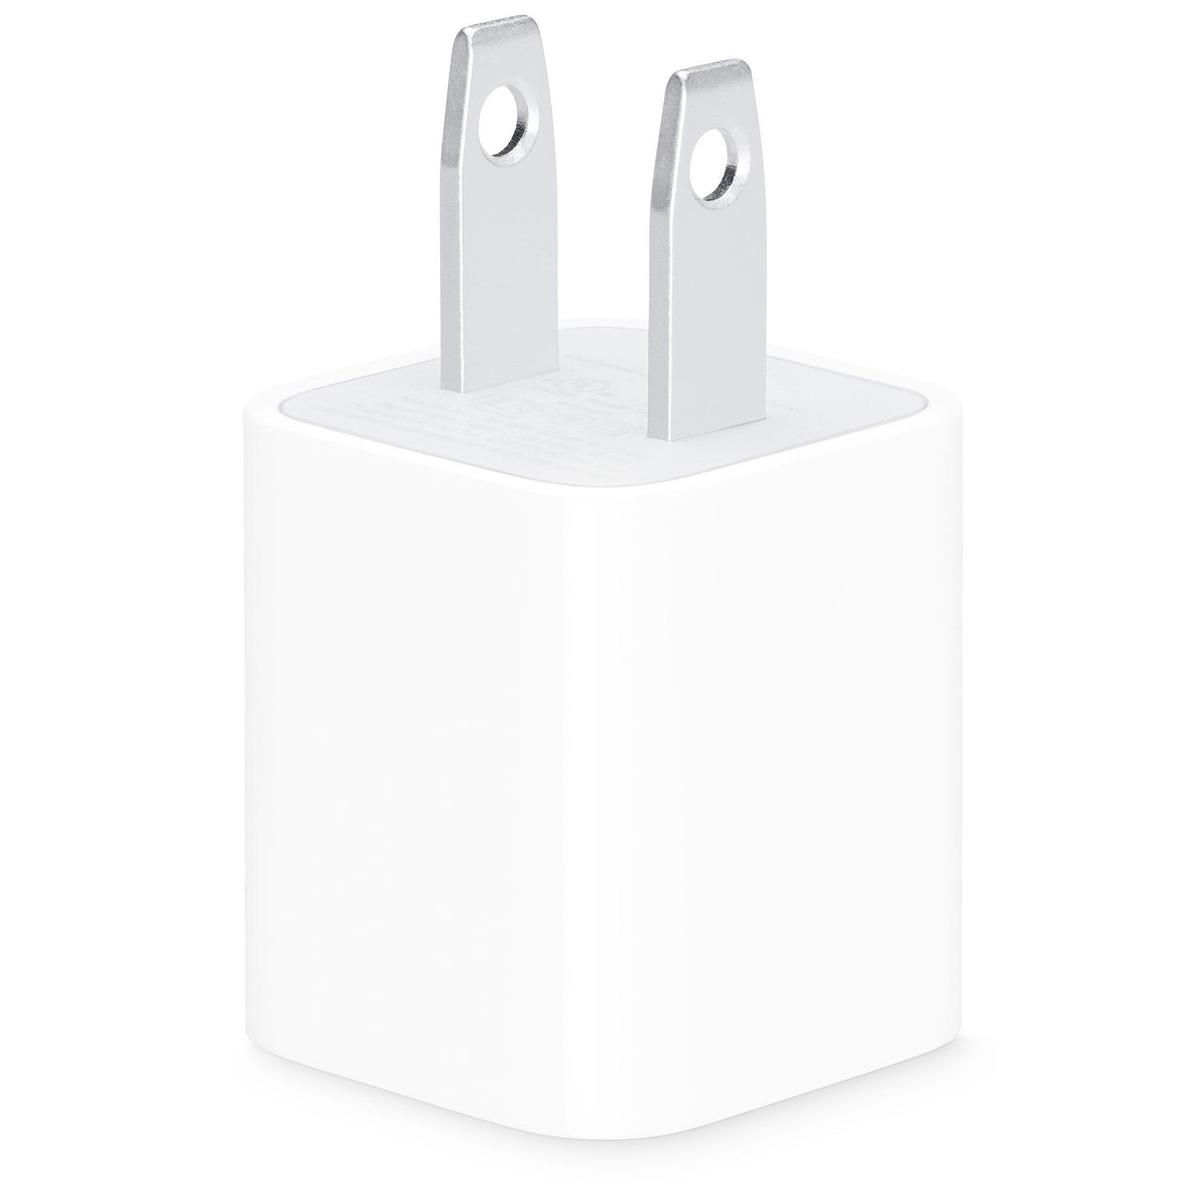 Image of Apple 5W USB Power Adapter